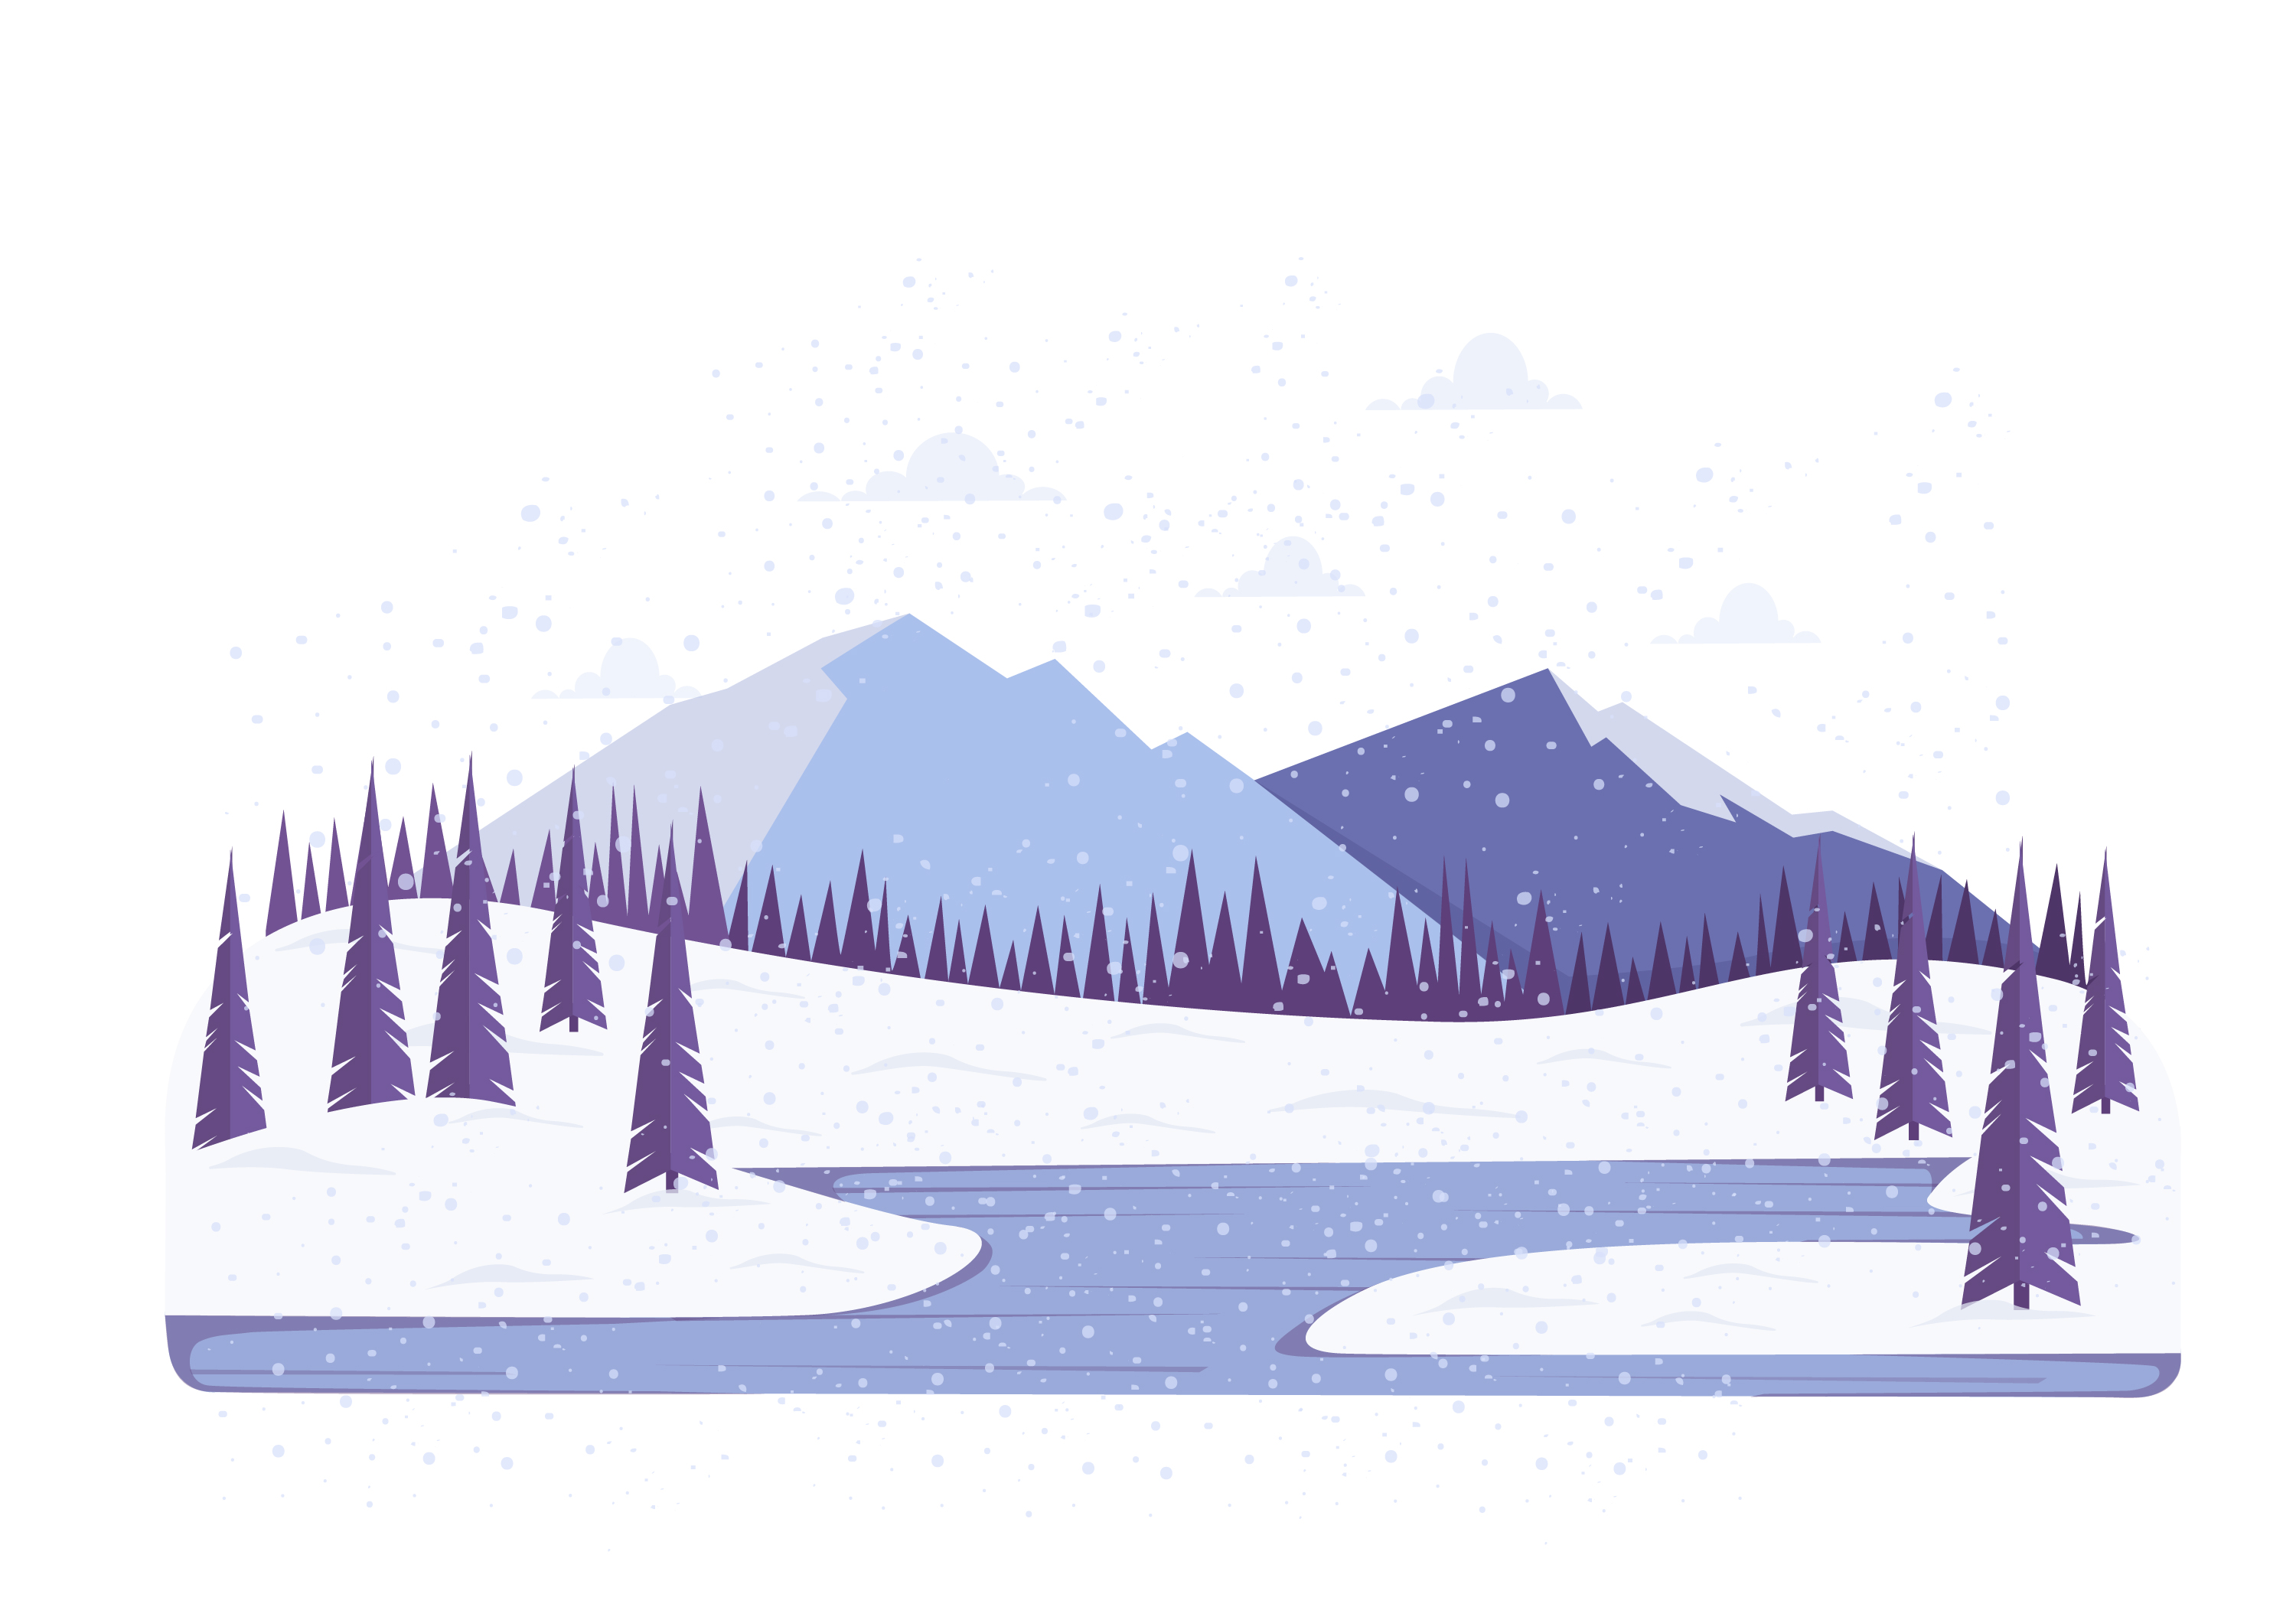 Download Vector Winter Landscape illustration 275139 - Download Free Vectors, Clipart Graphics & Vector Art